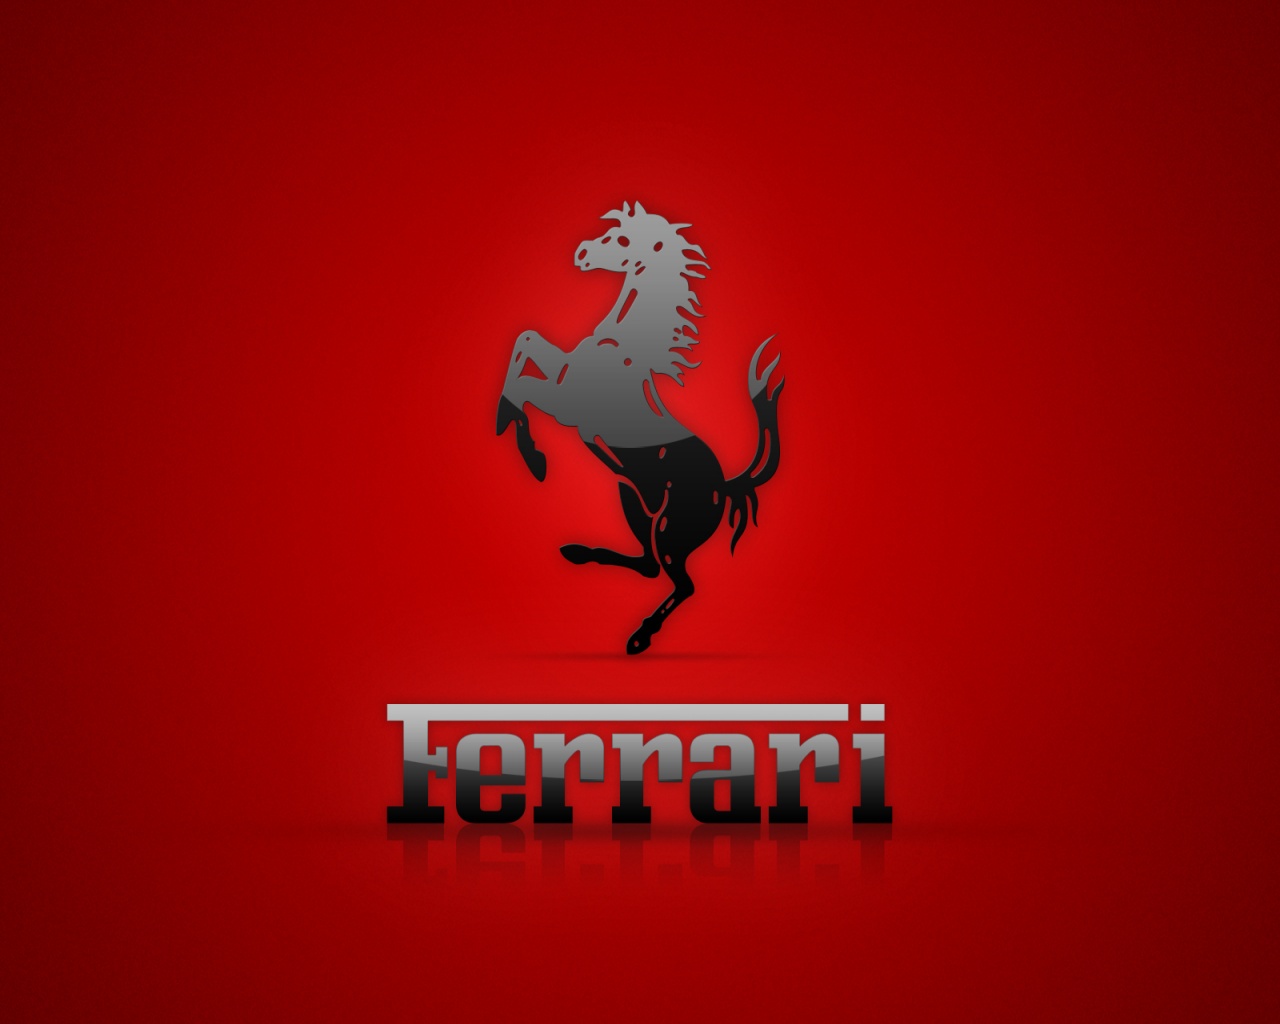 Cool Wallpaper Ferrari Logo Pictures Desktop Background For